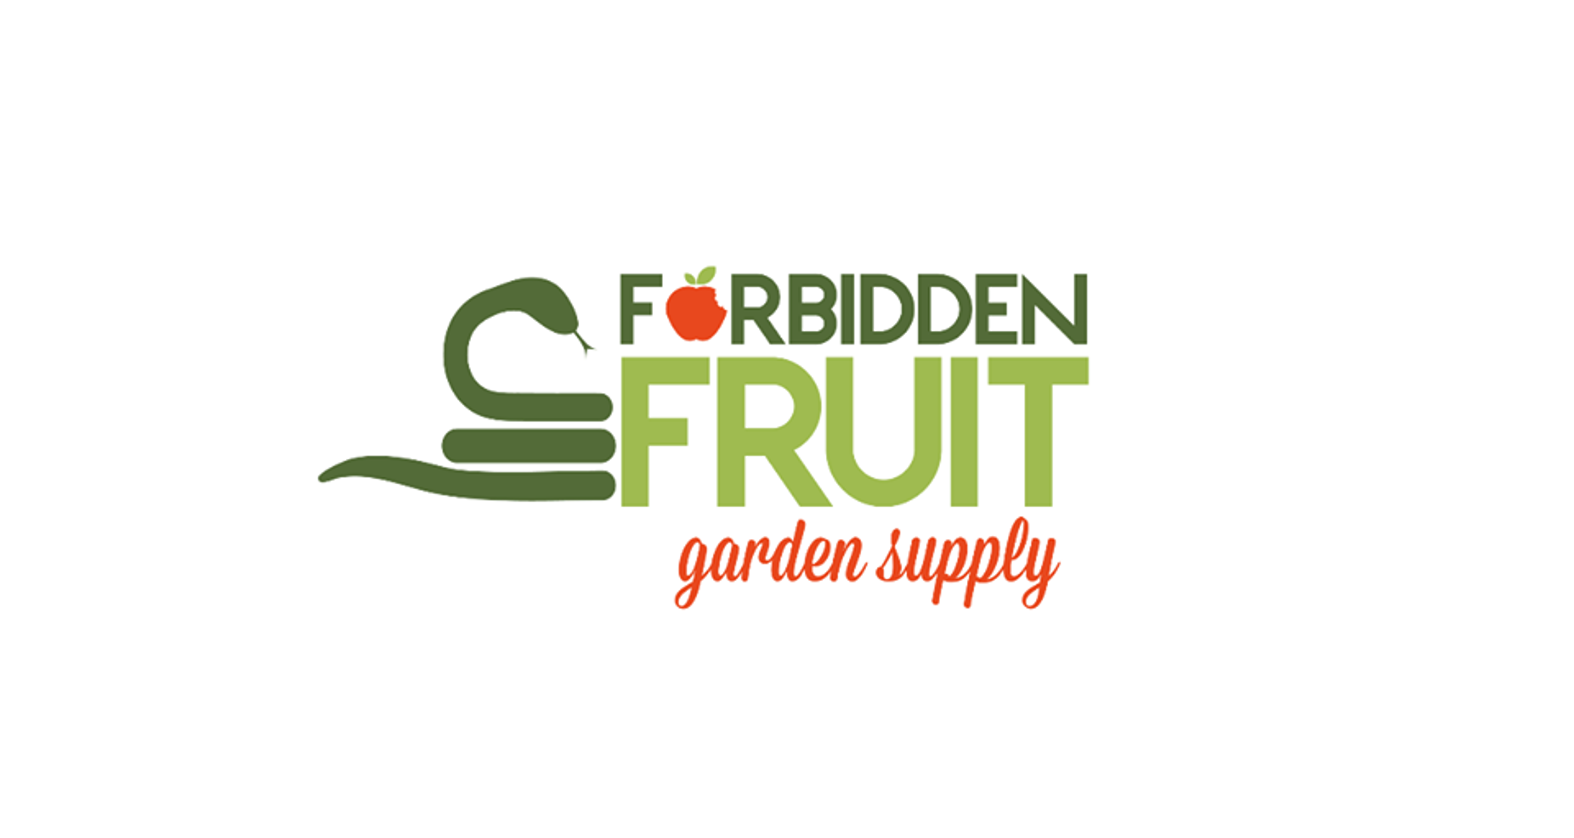 FORBIDDEN FRUIT GARDEN SUPPLY